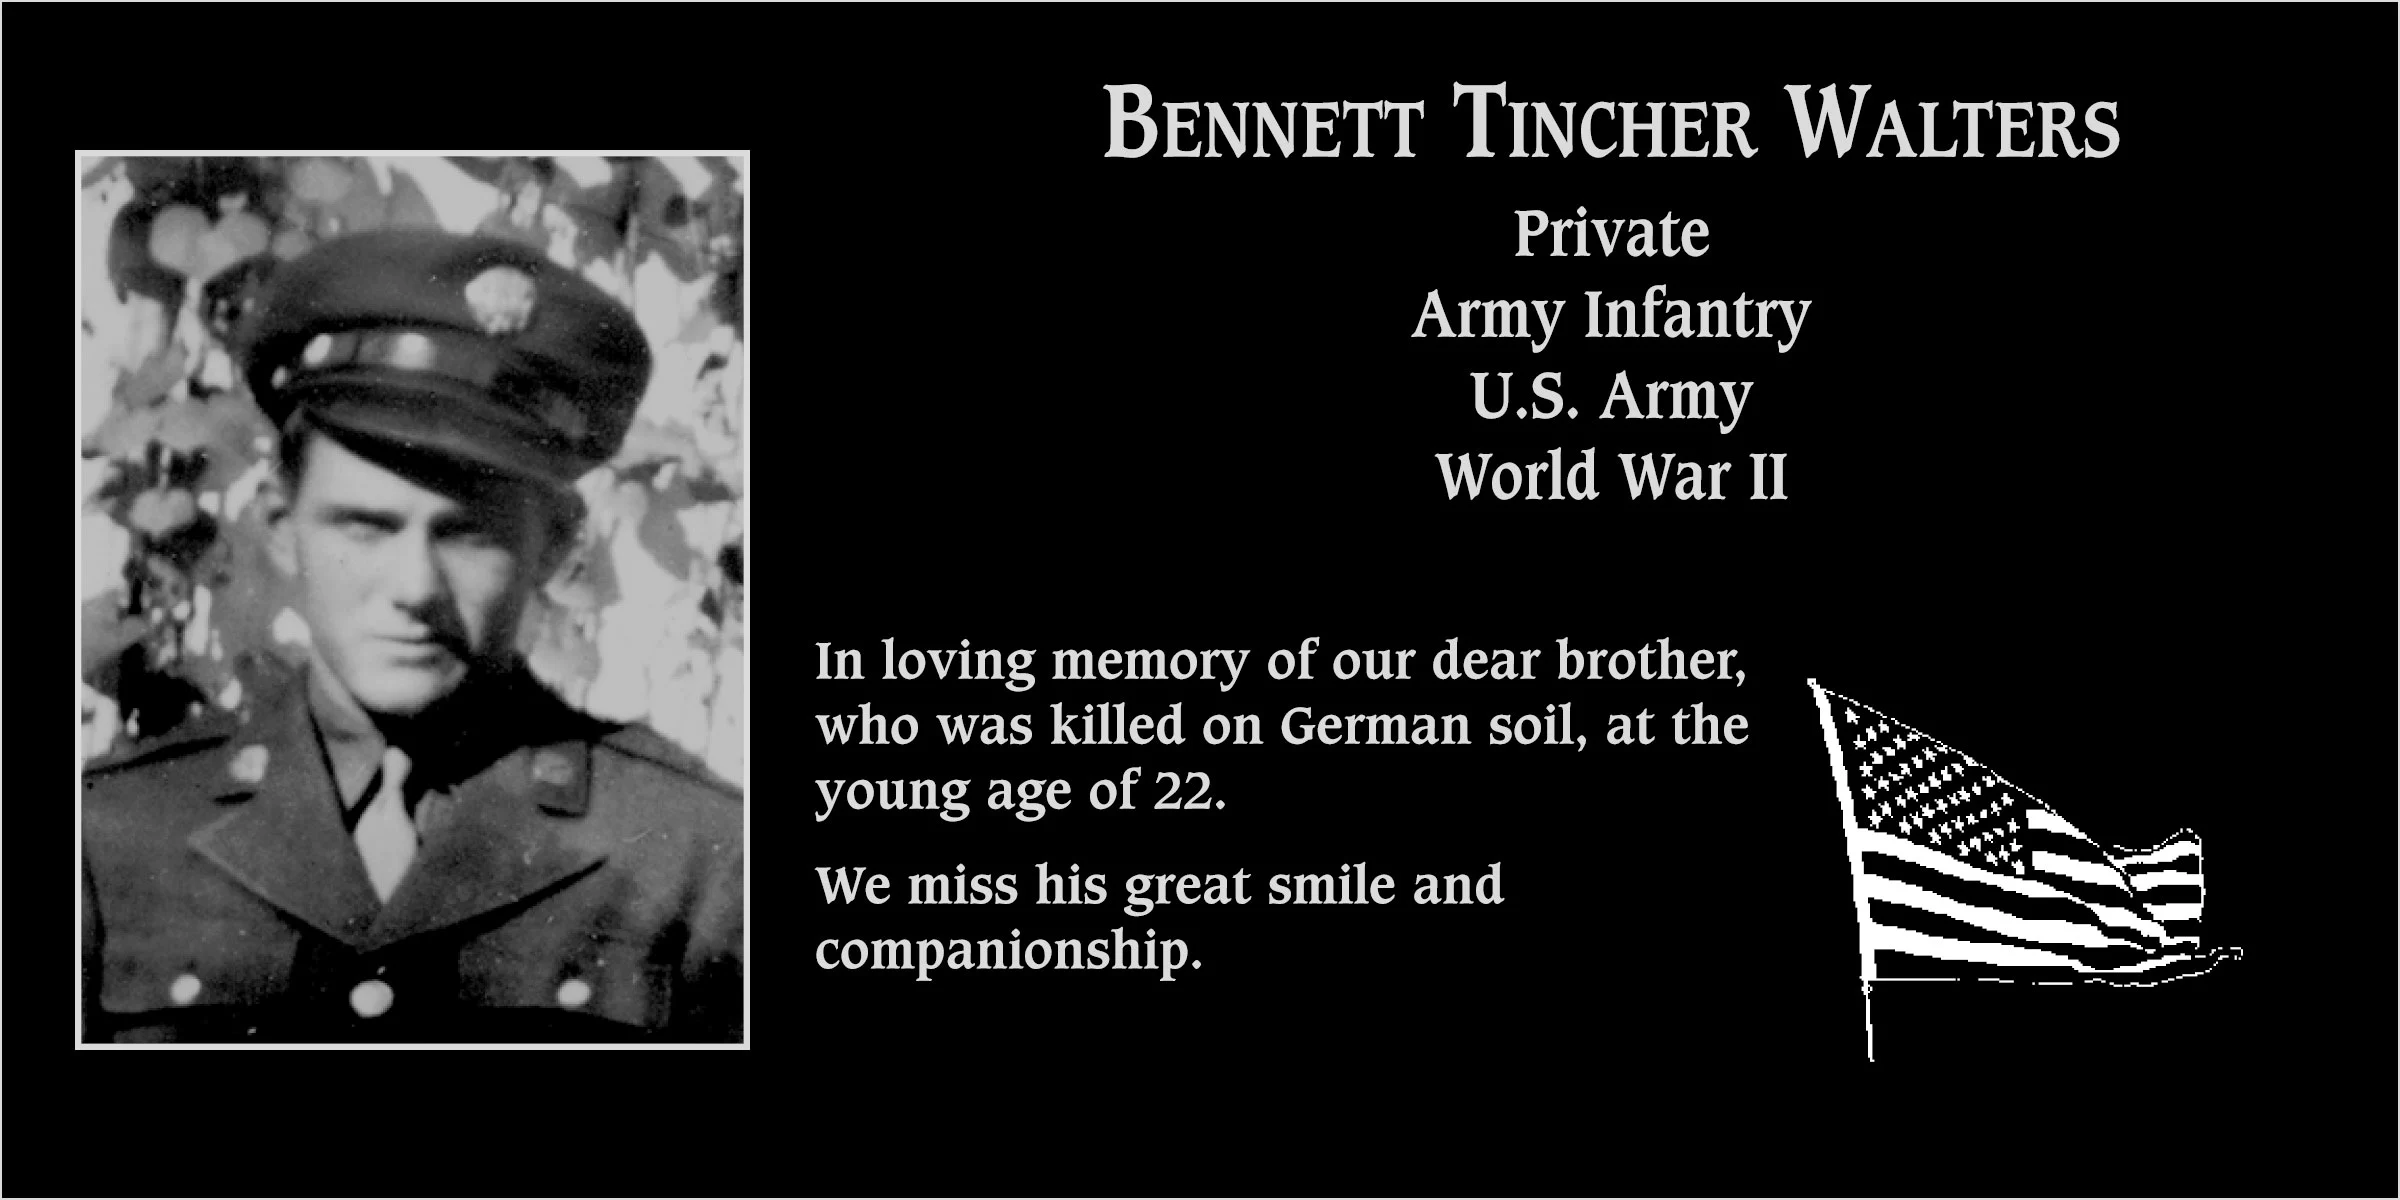 Bennett Tincher Walters